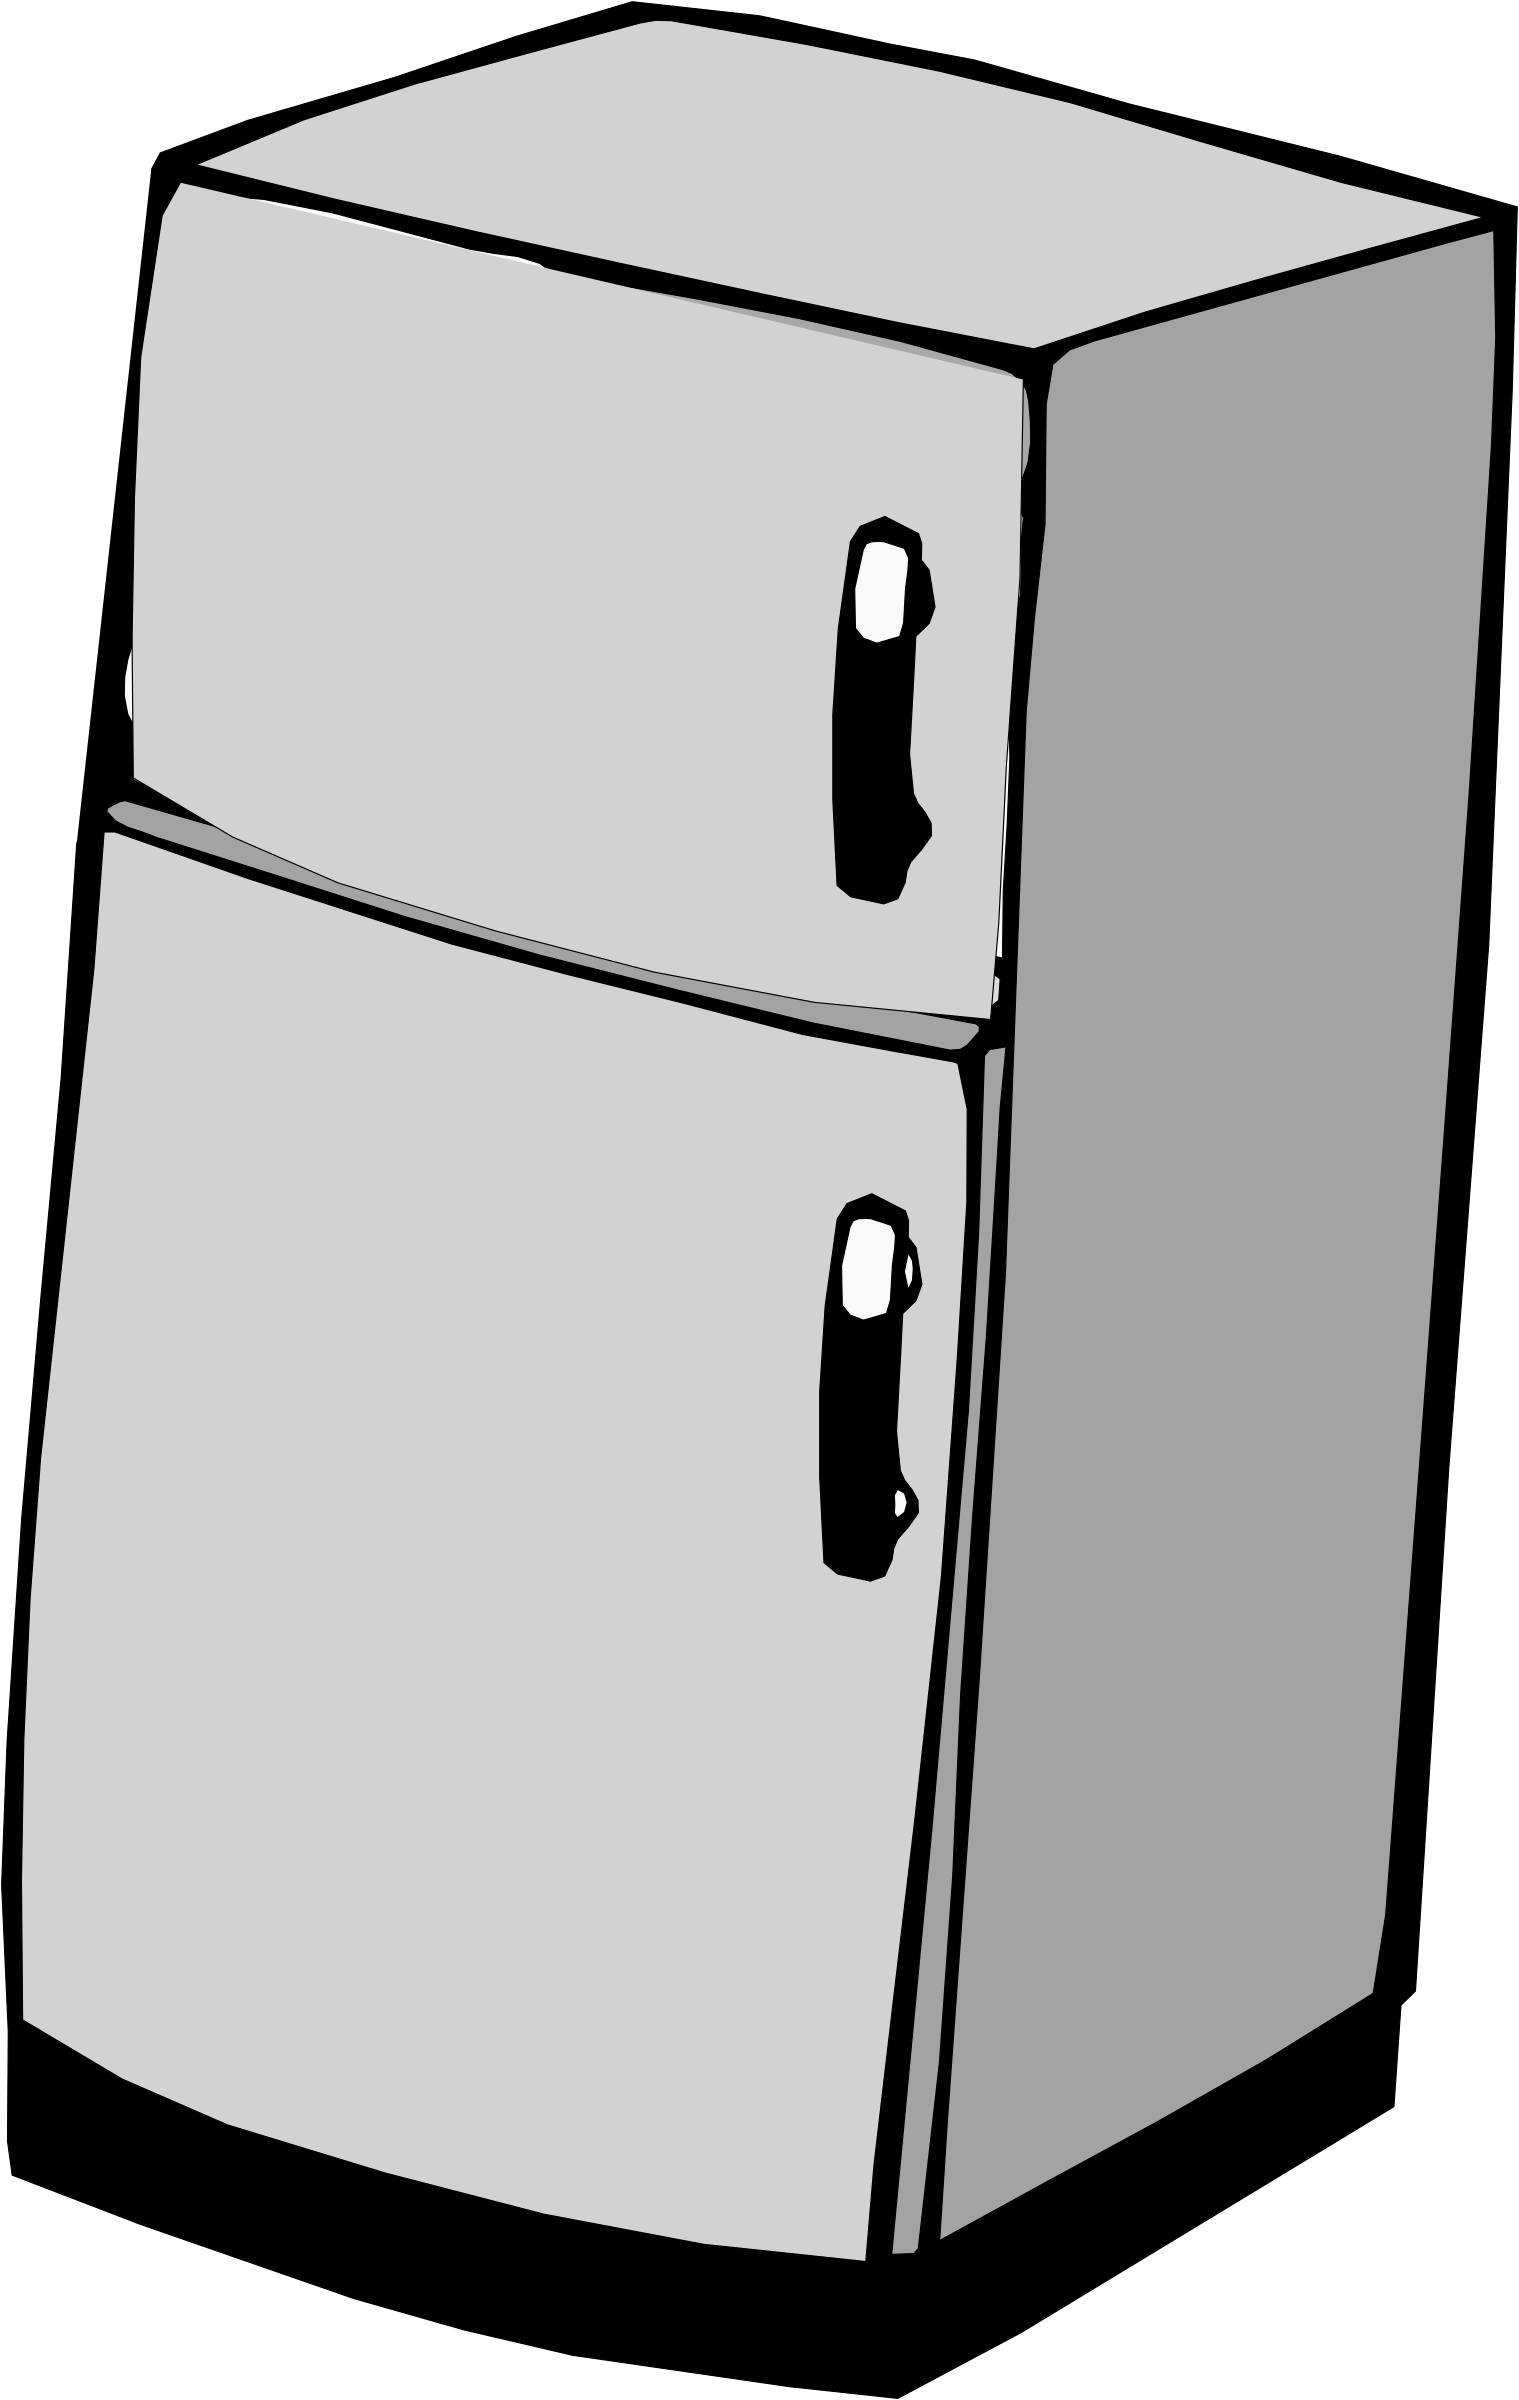 isometric view of a gray cartoon refrigerator